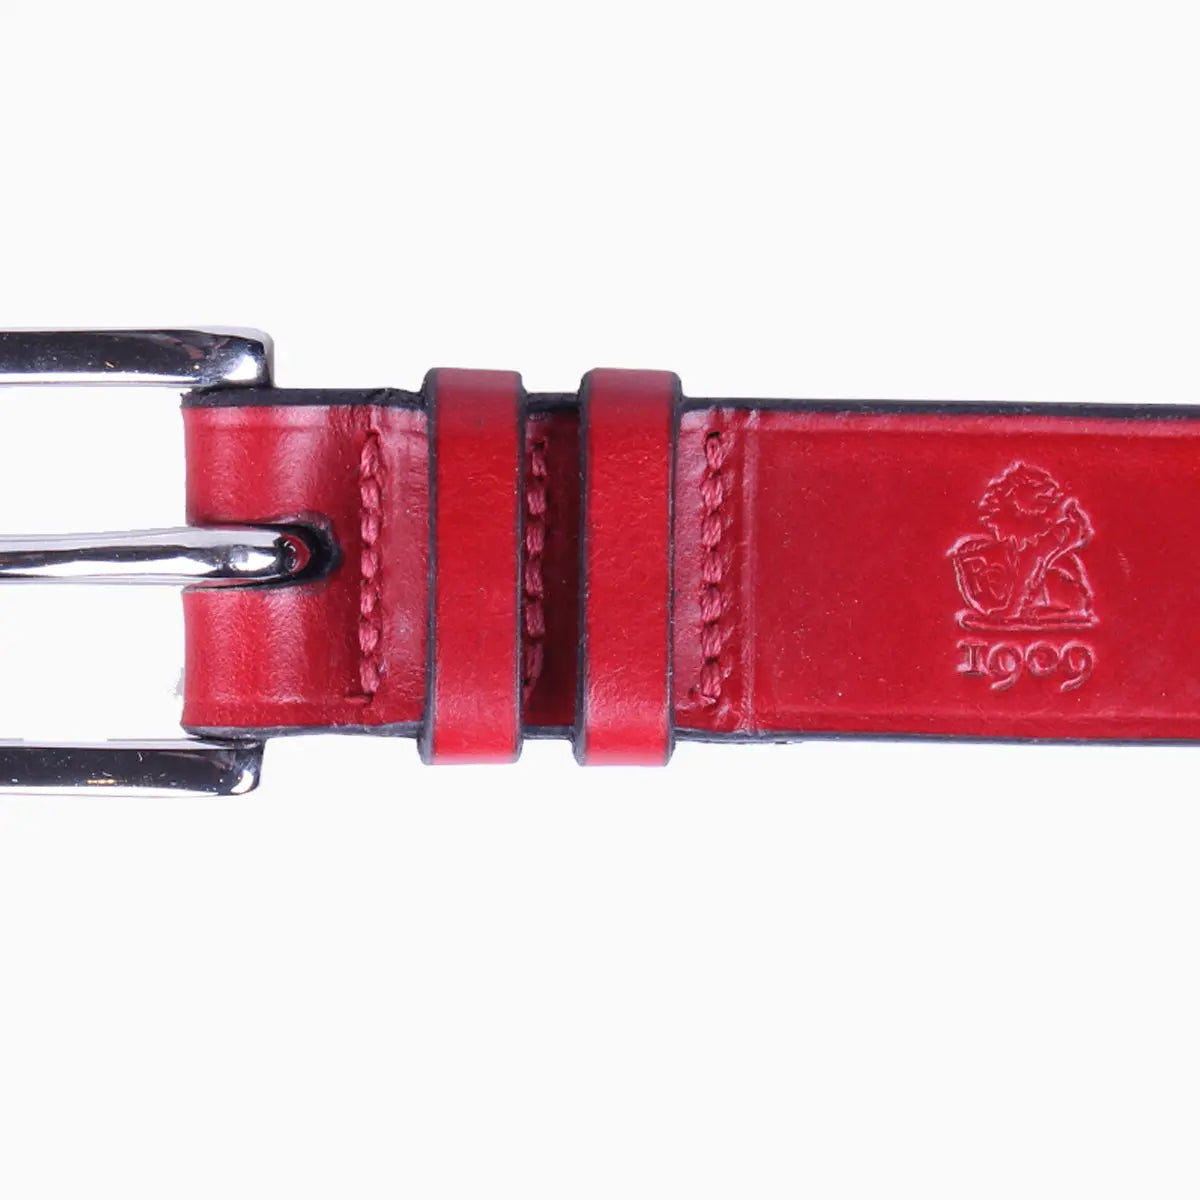 Red ‘Avon’ Bridle Hide Leather Belt  Robert Old   